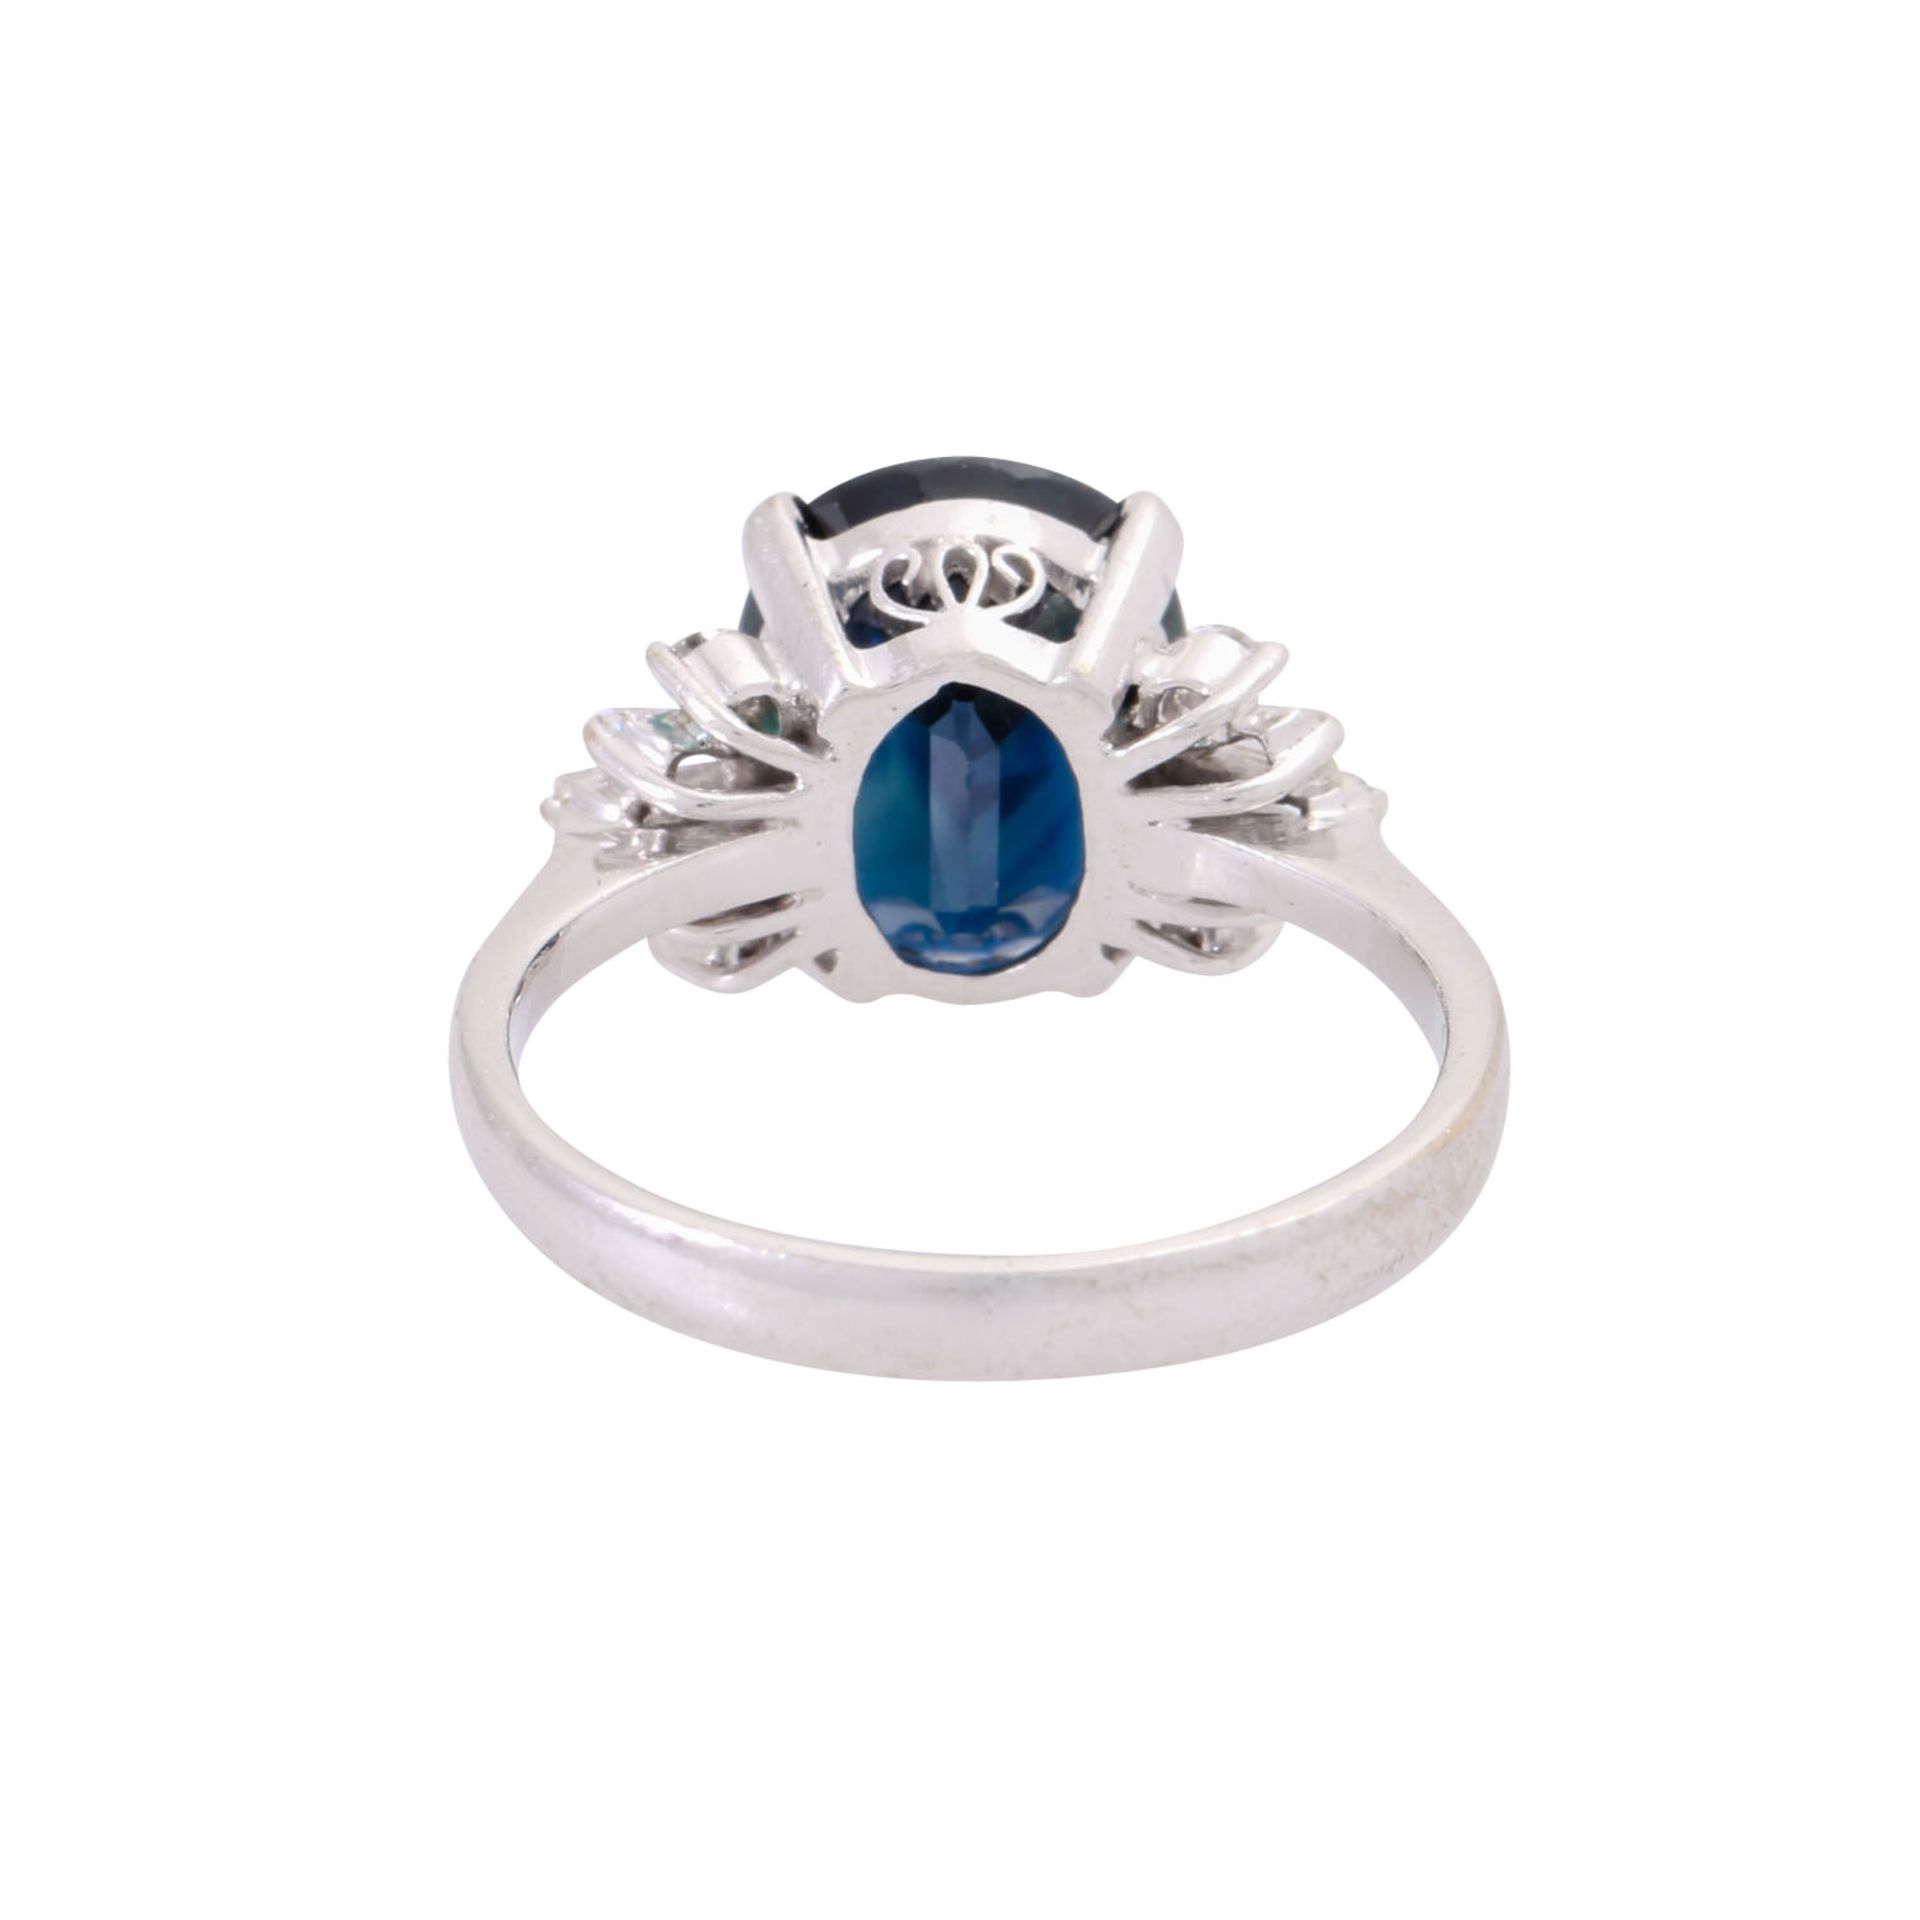 Ring mit oval facettiertem Saphir ca. 4,5 ct und Diamanten zus. ca. 0,25 ct, - Image 3 of 3